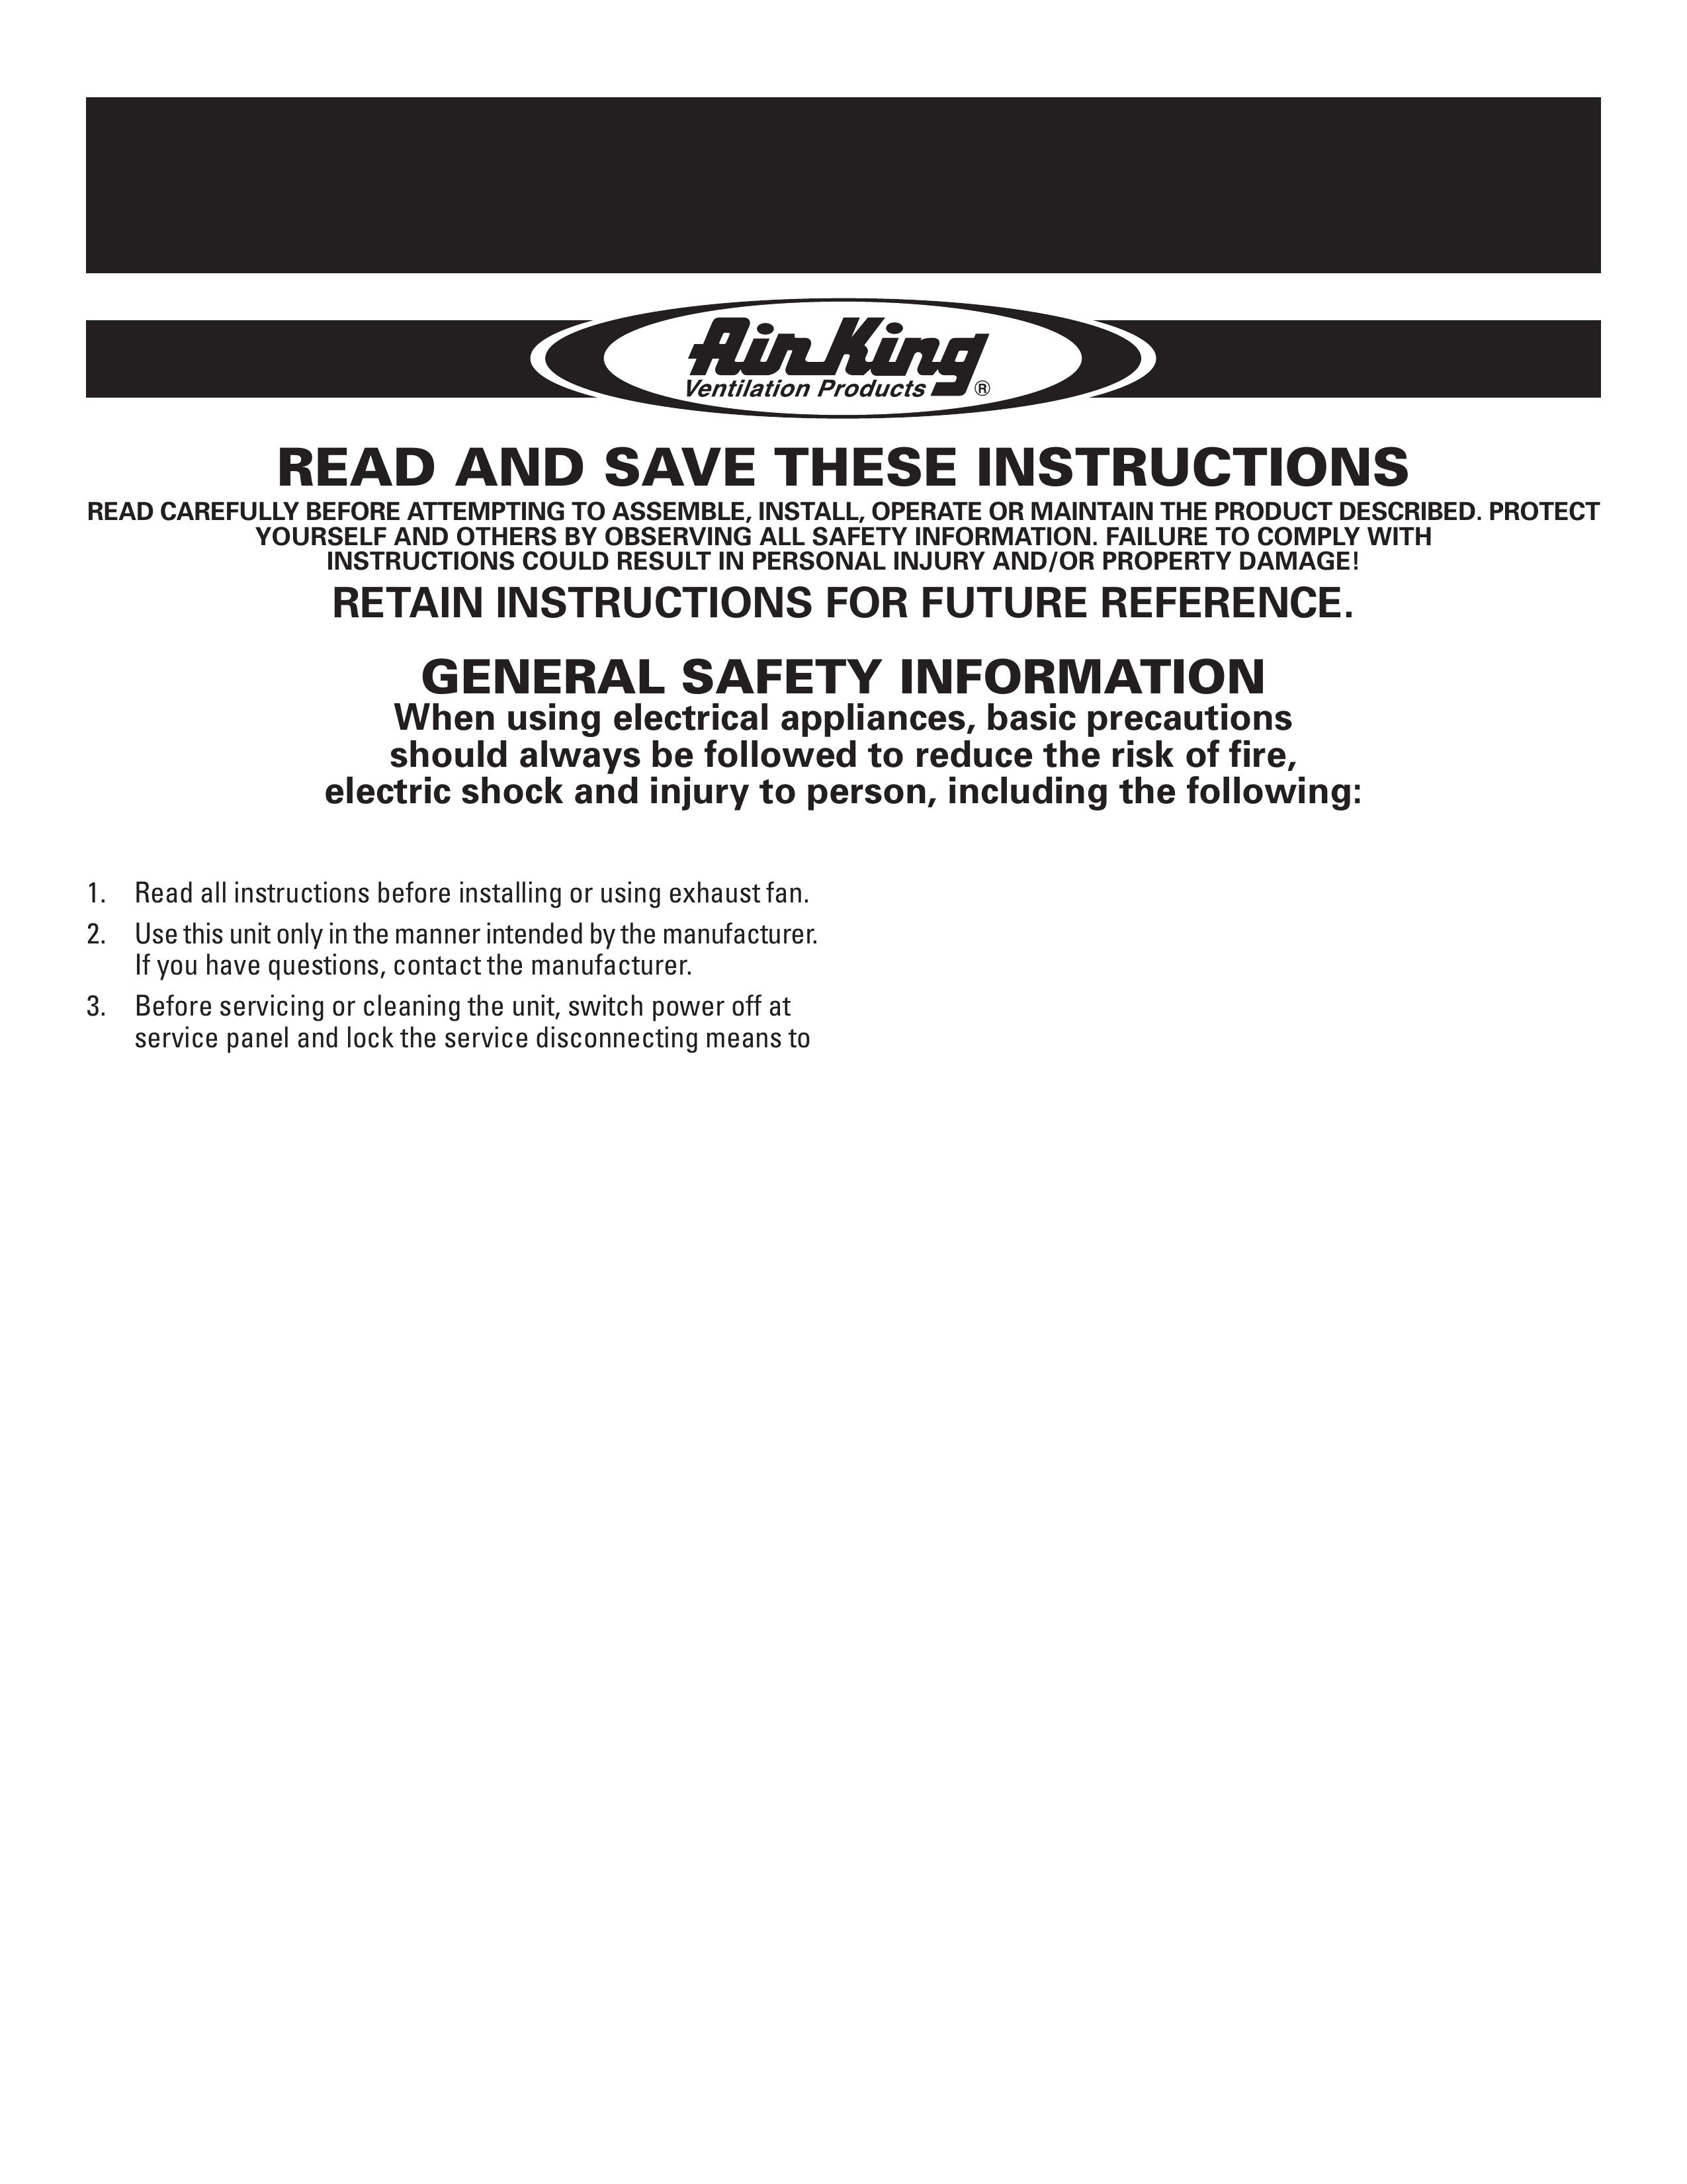 Air King AK50LS Blower User Manual